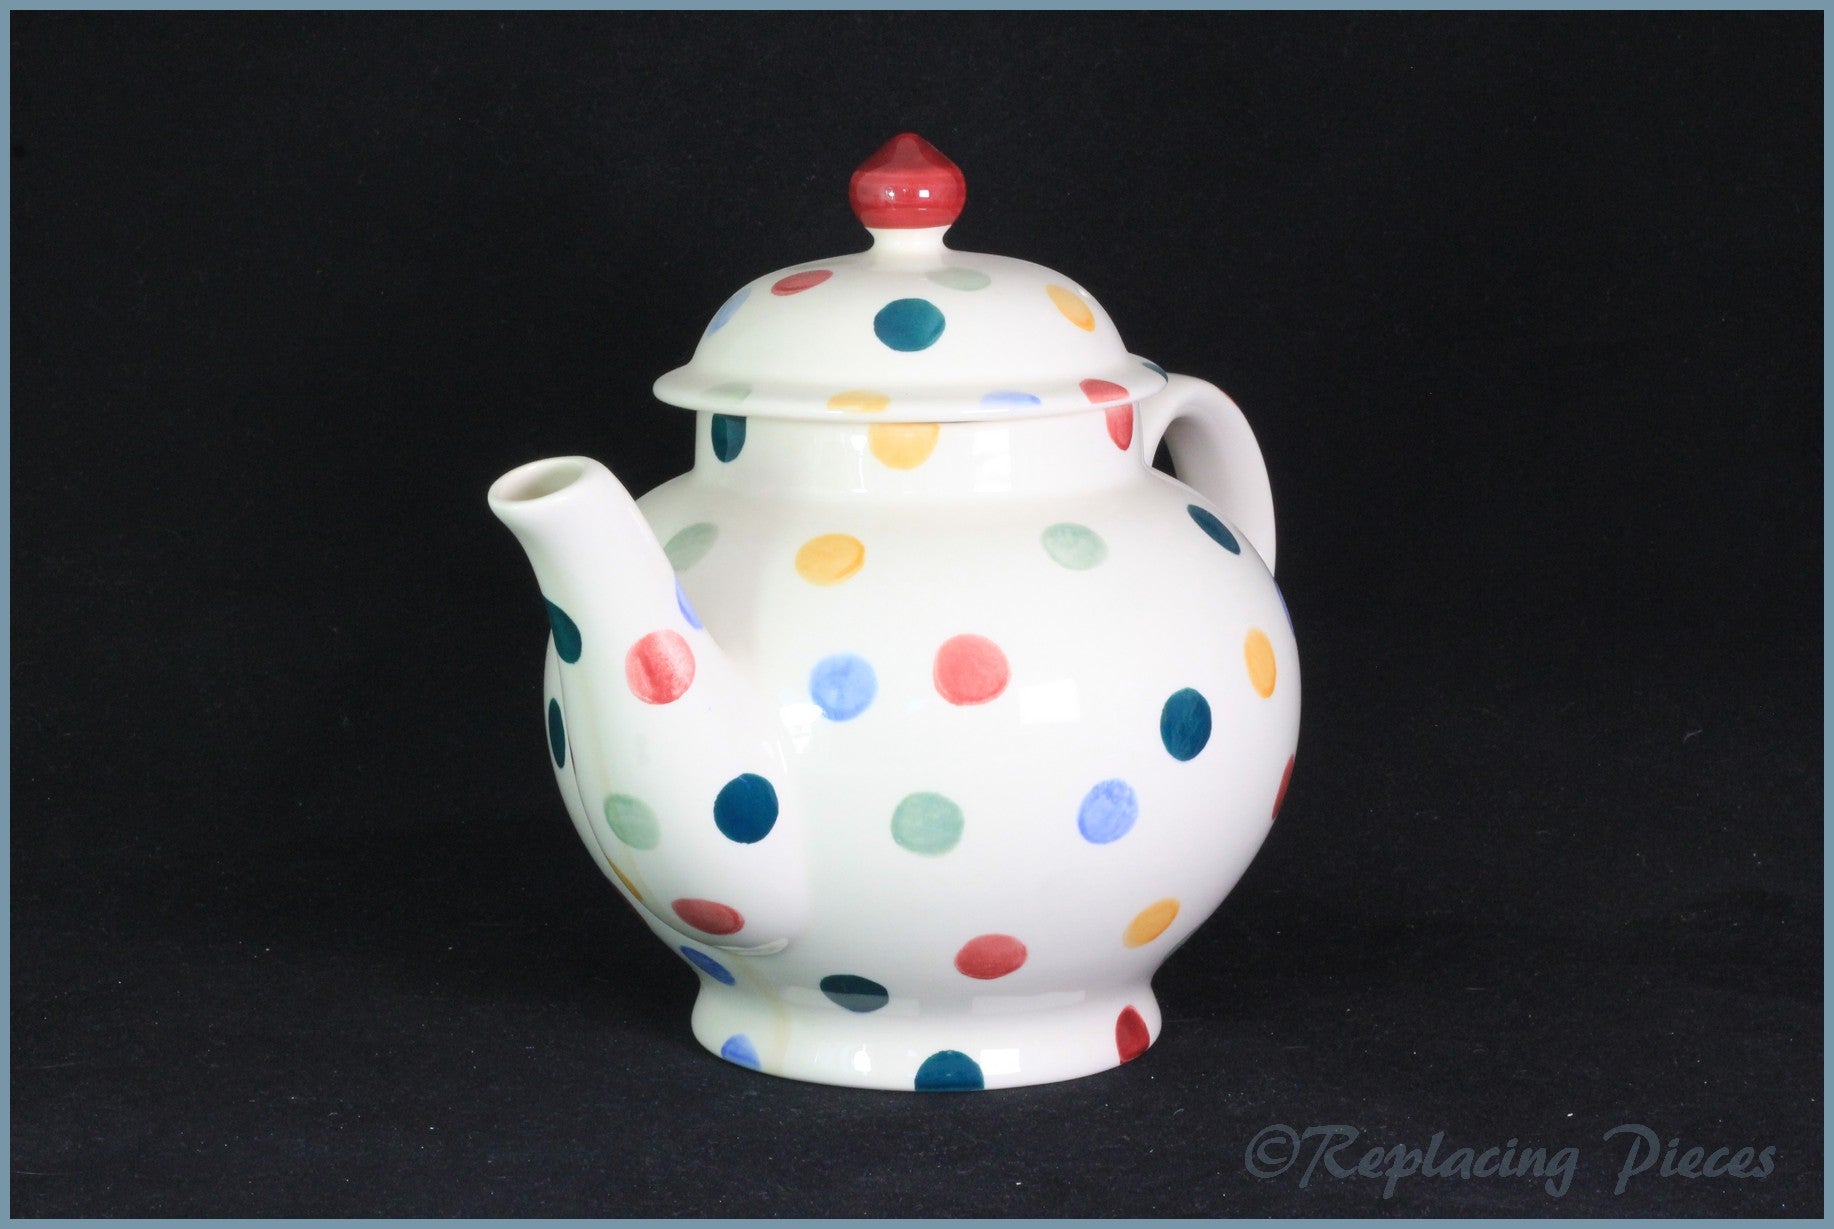 Emma Bridgewater - Polka Dot - 2 Pint Teapot